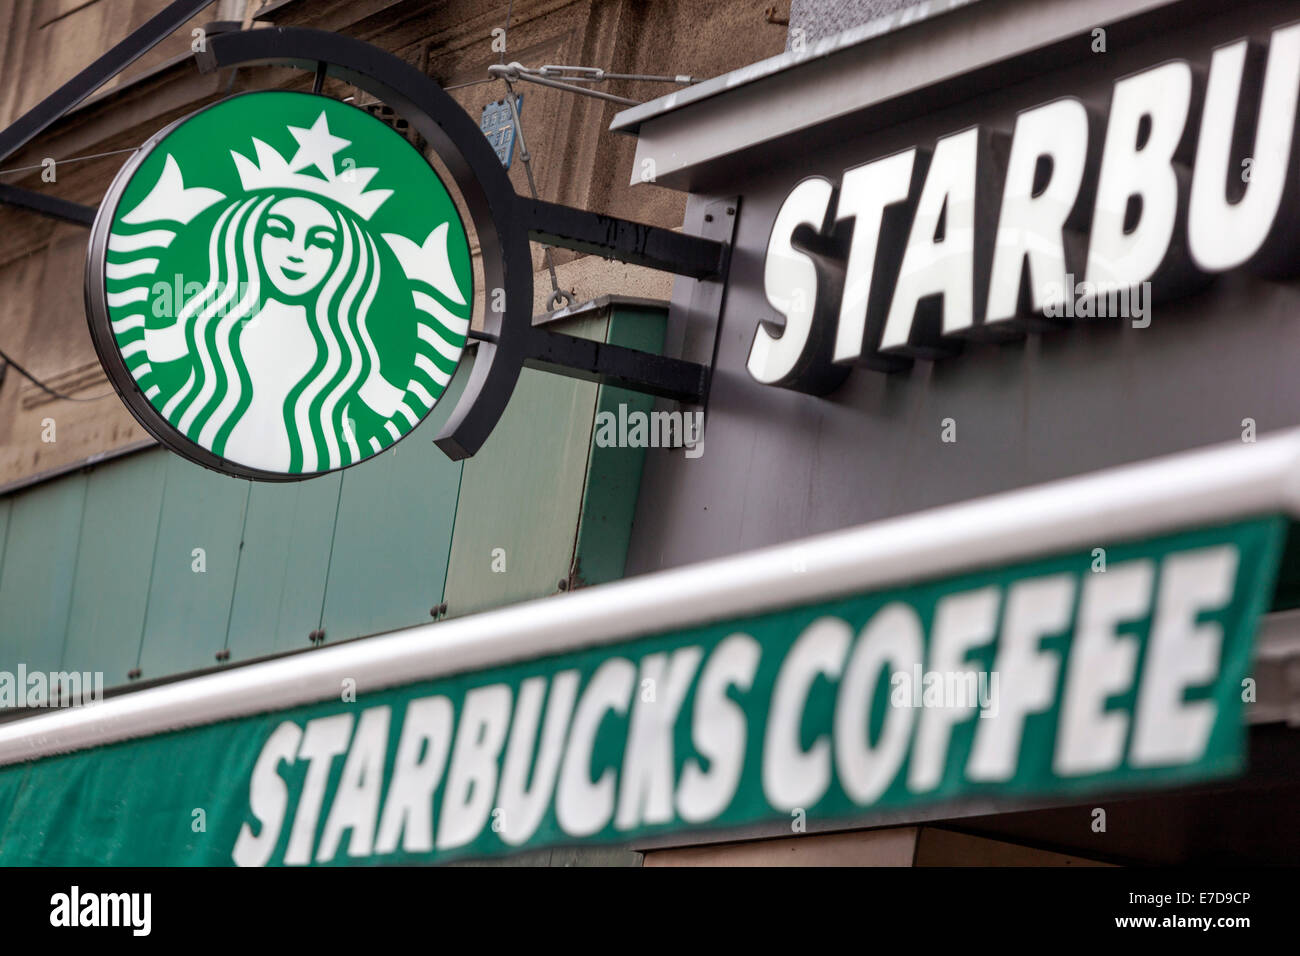 Starbucks Coffee sign Prague Czech Republic Stock Photo